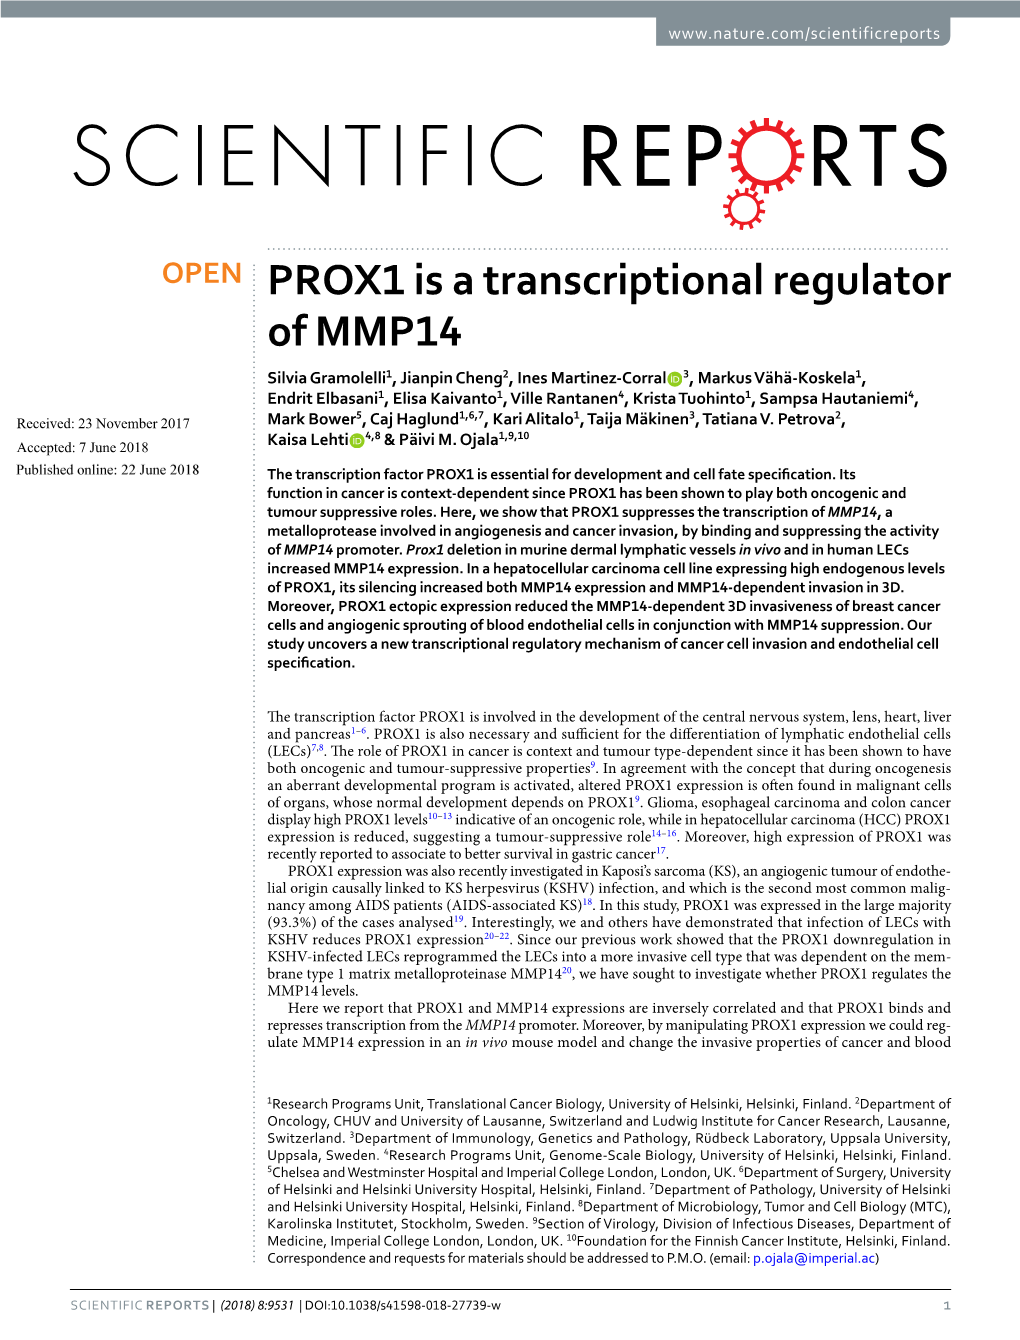 PROX1 Is a Transcriptional Regulator of MMP14